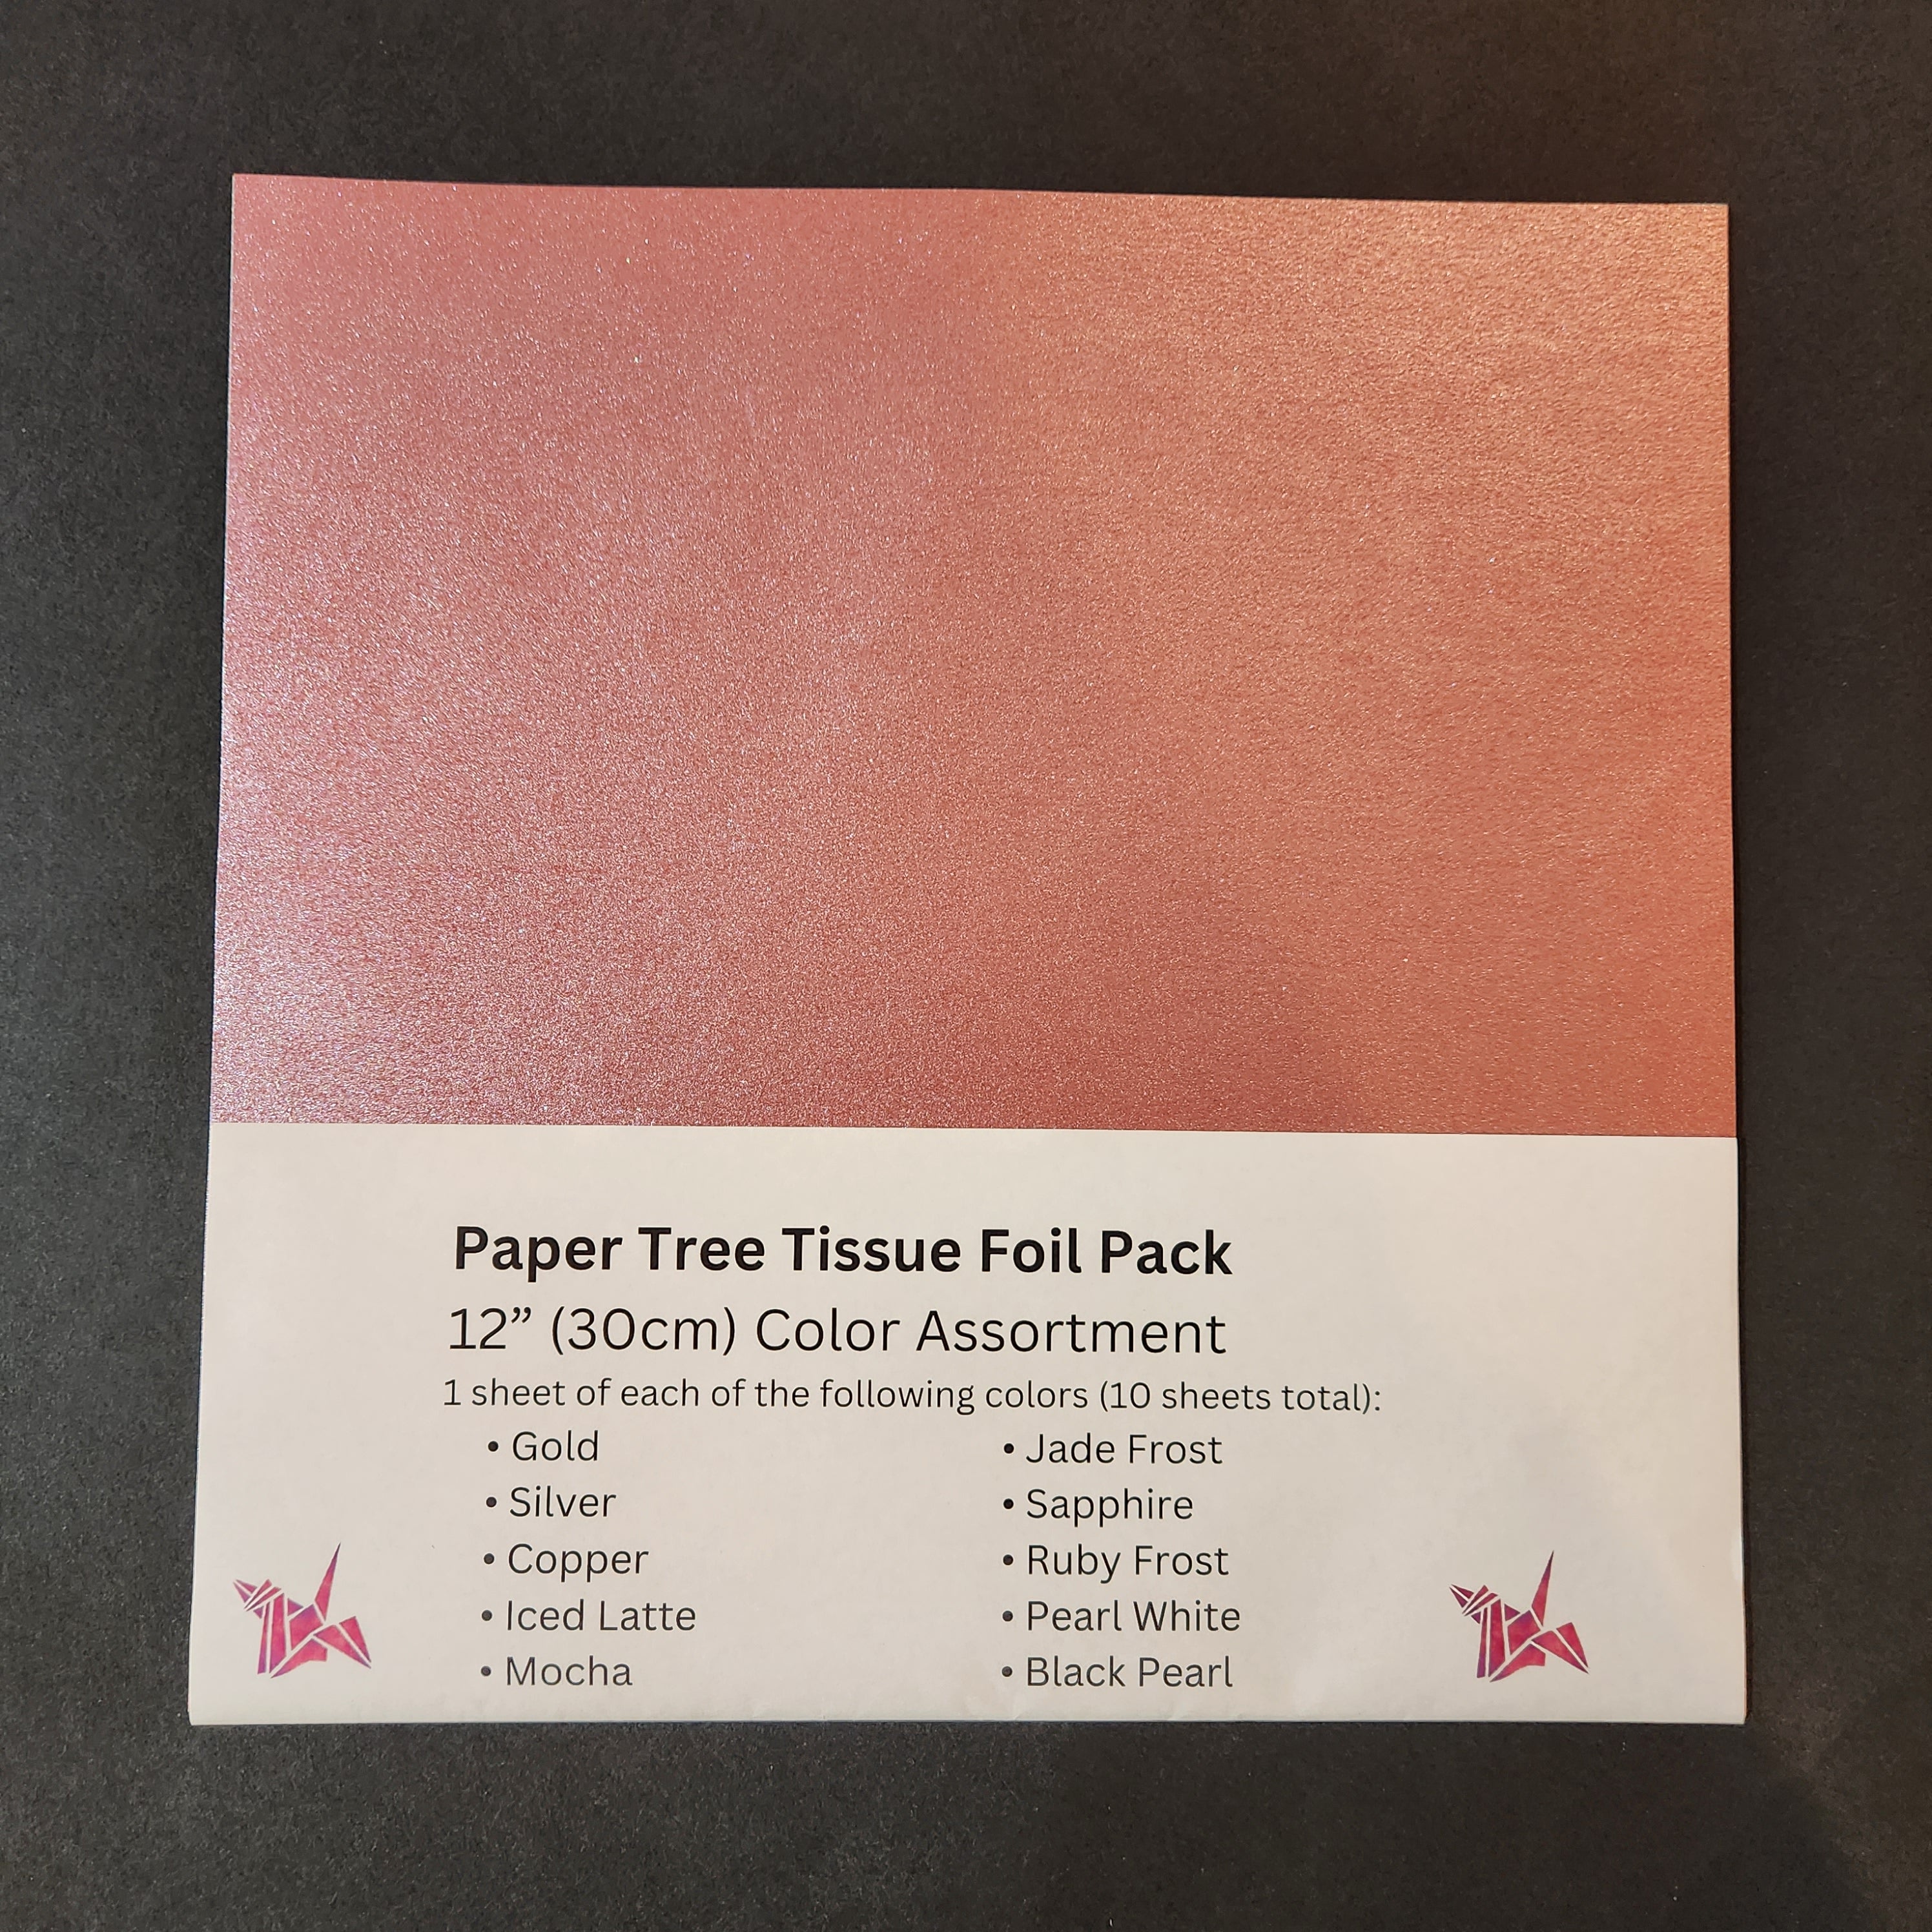 Paper Tree Tissue Foil Pack